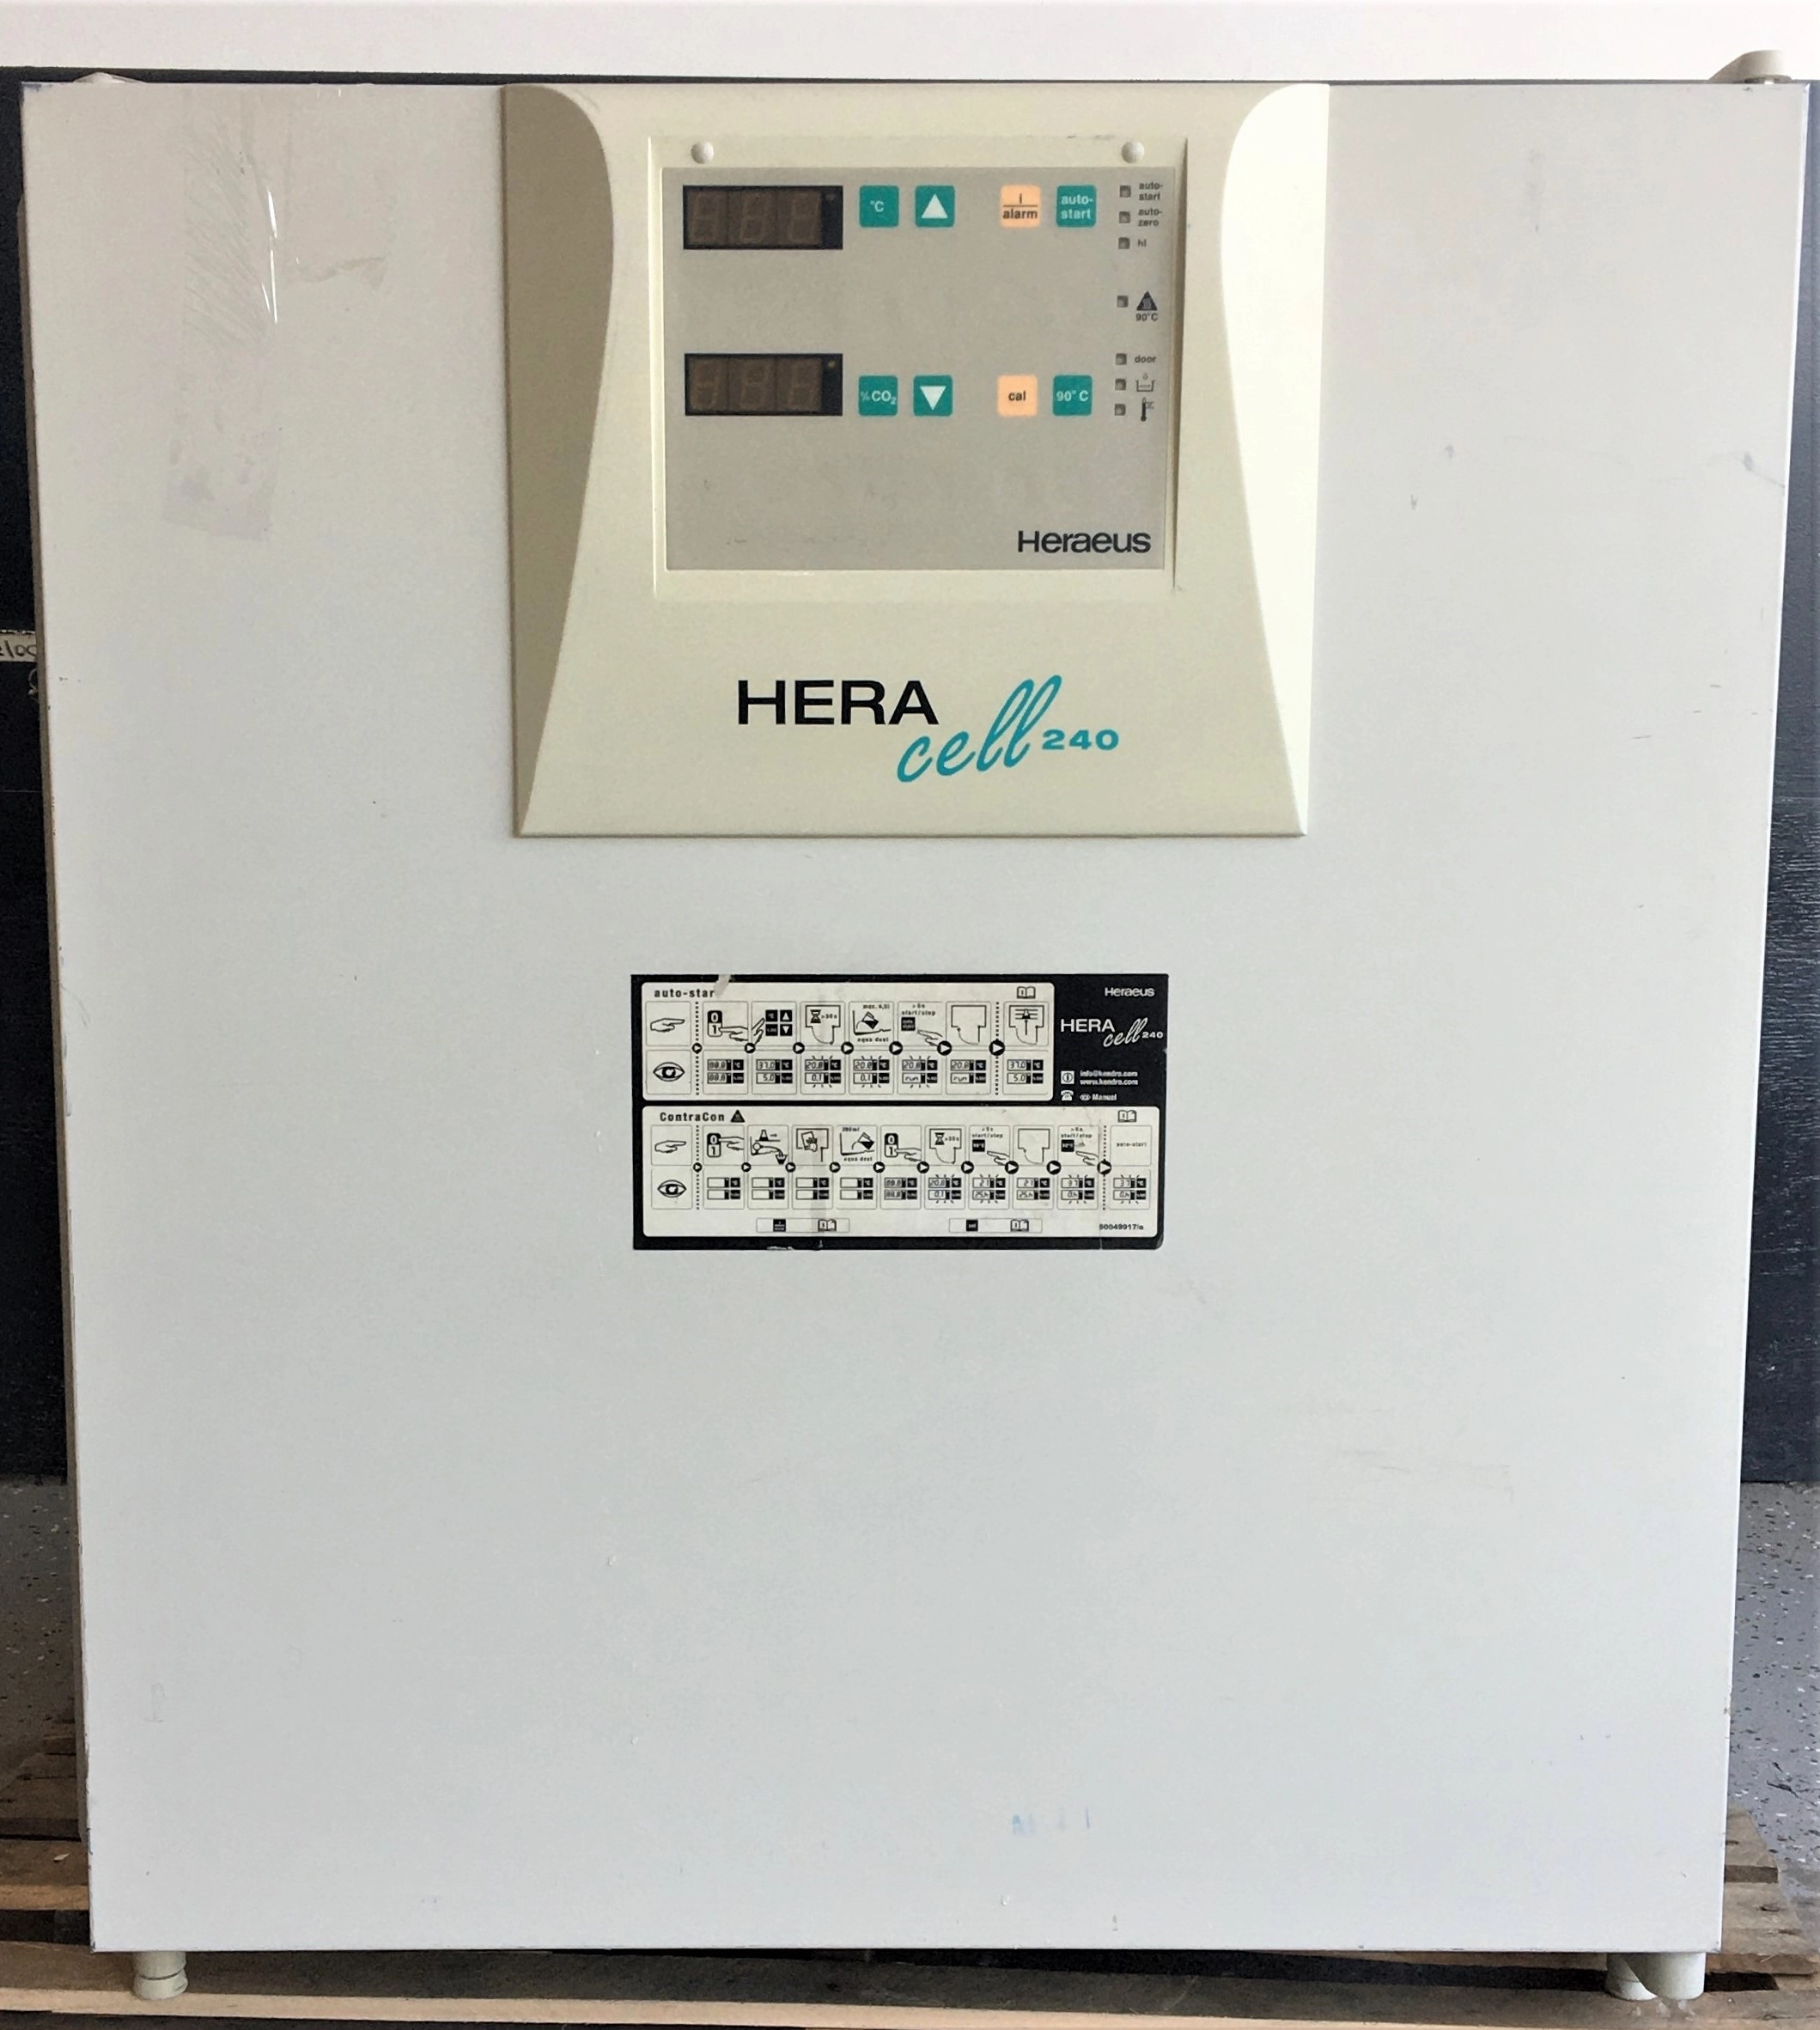 Heraeus HERAcell 240 CO2 Incubator - 8.4 Cu-Ft